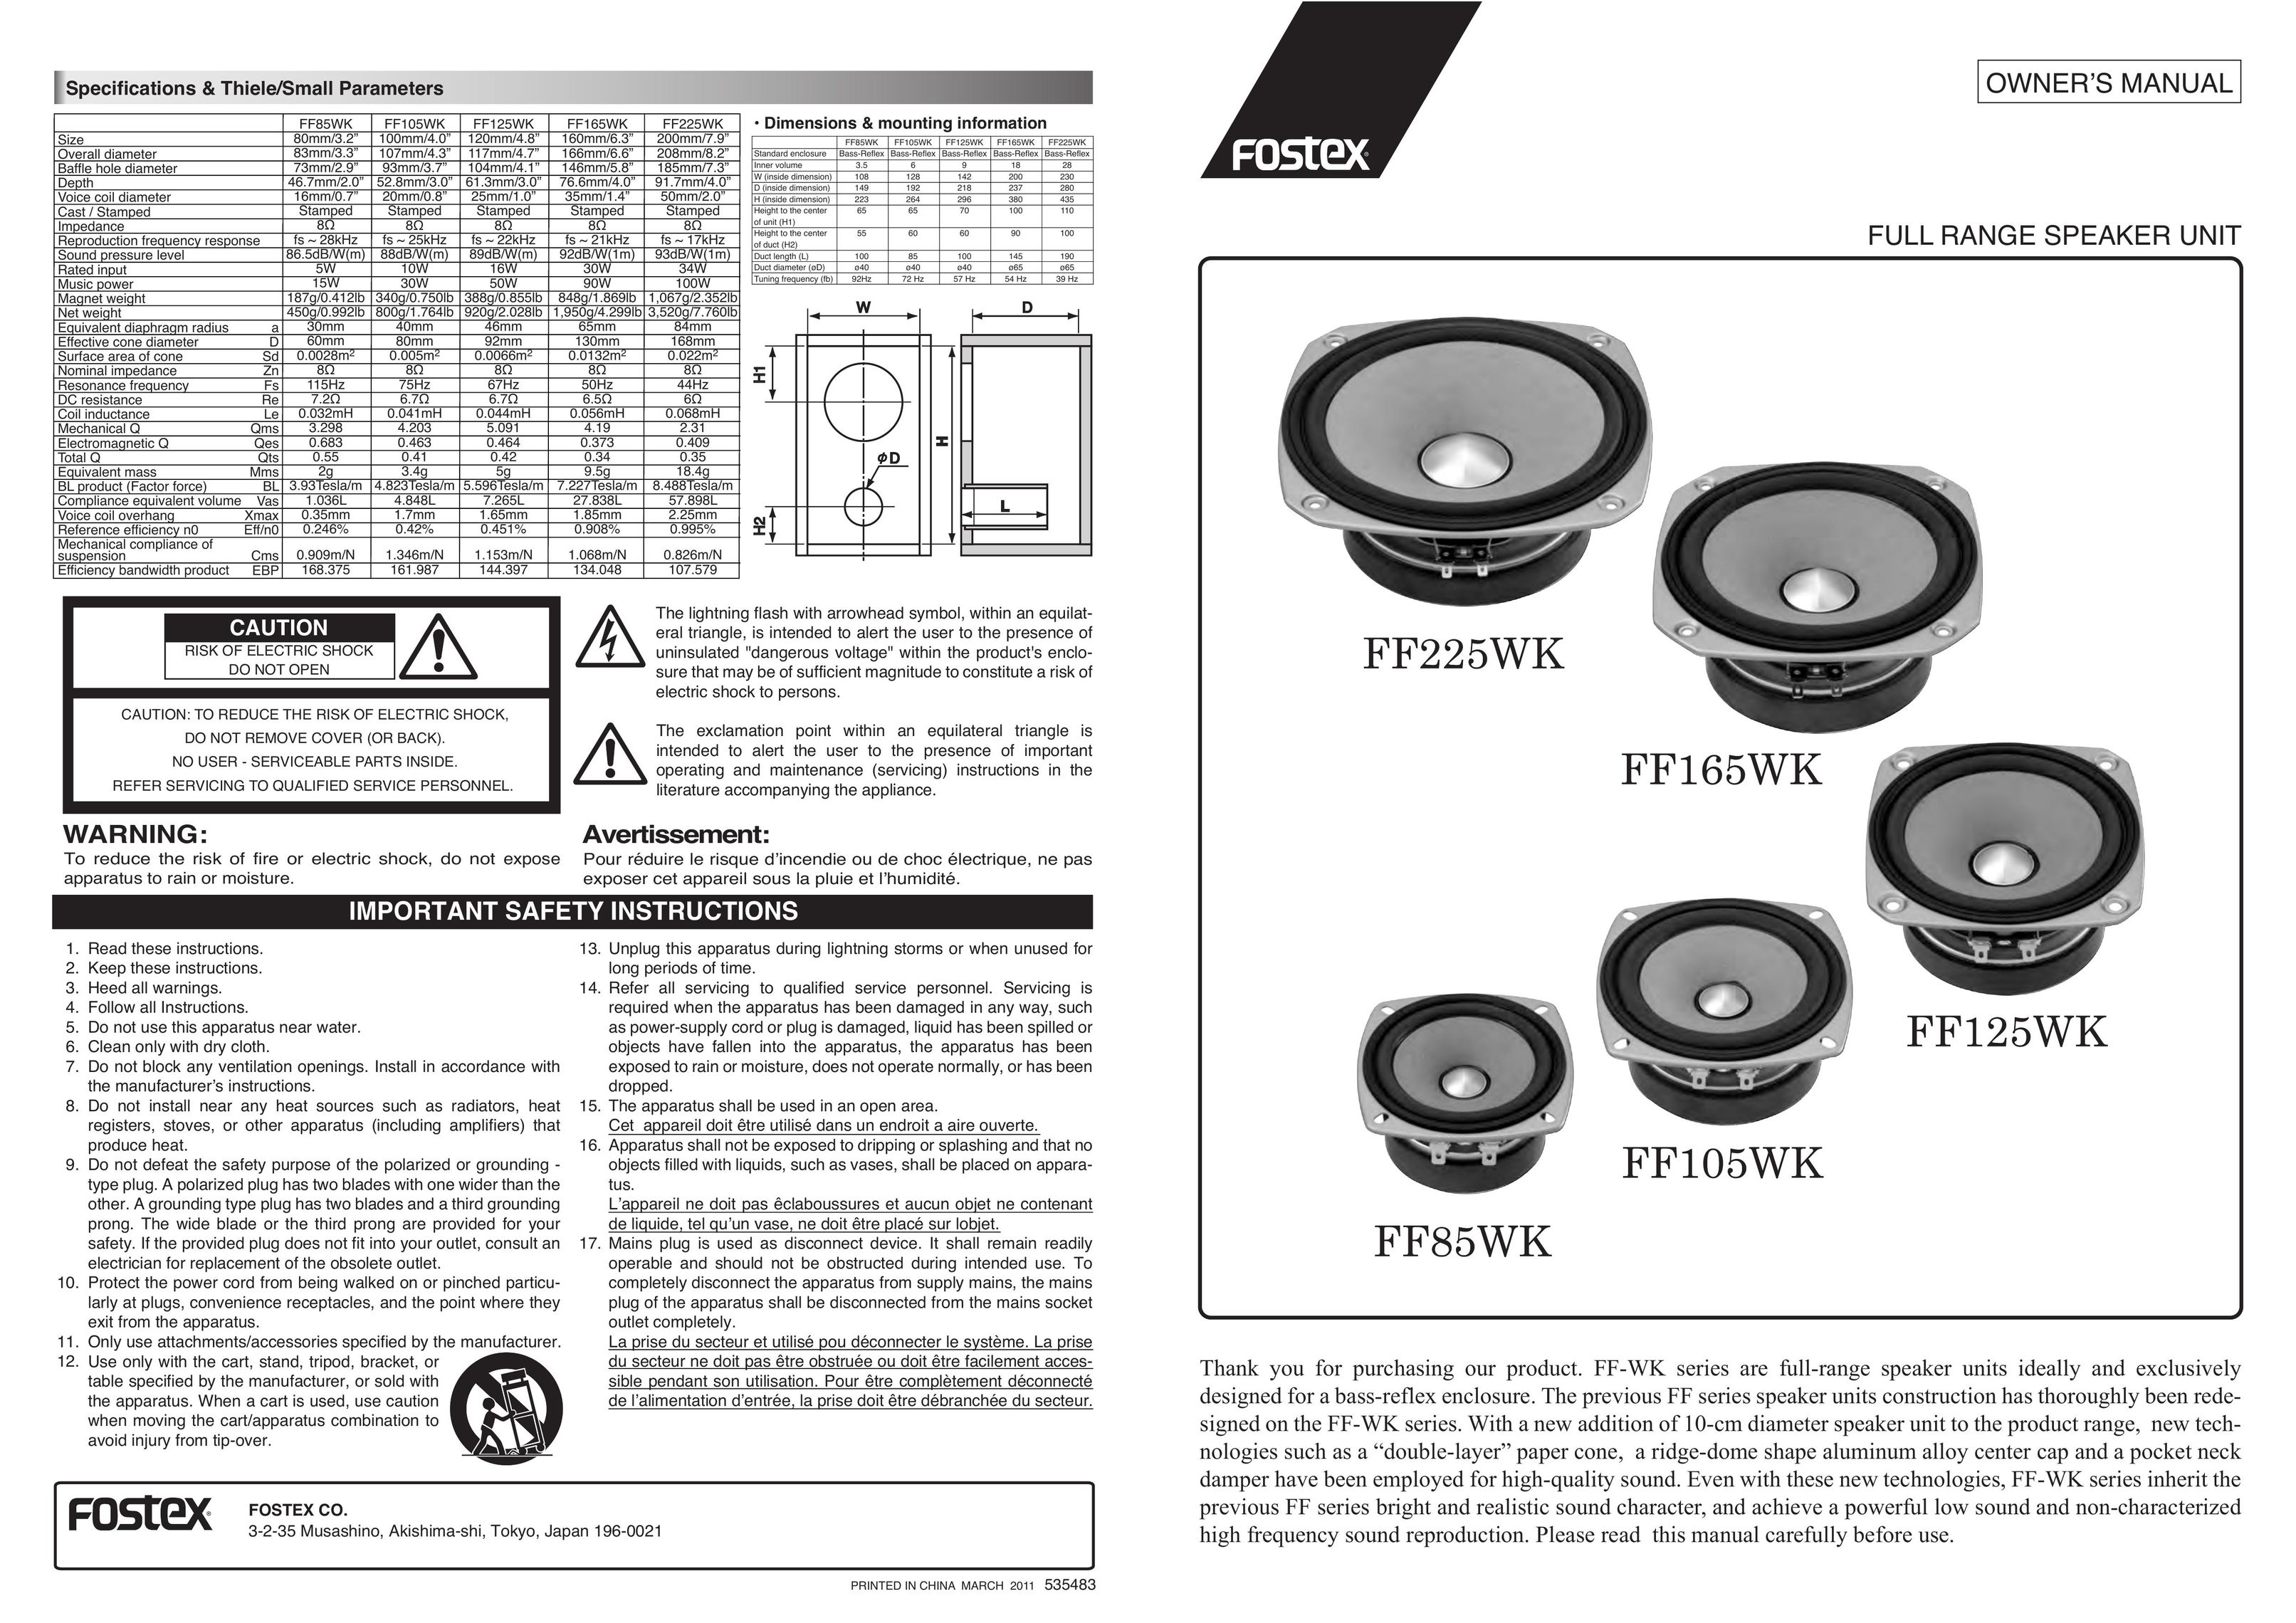 Fostex FF125WK Car Speaker User Manual